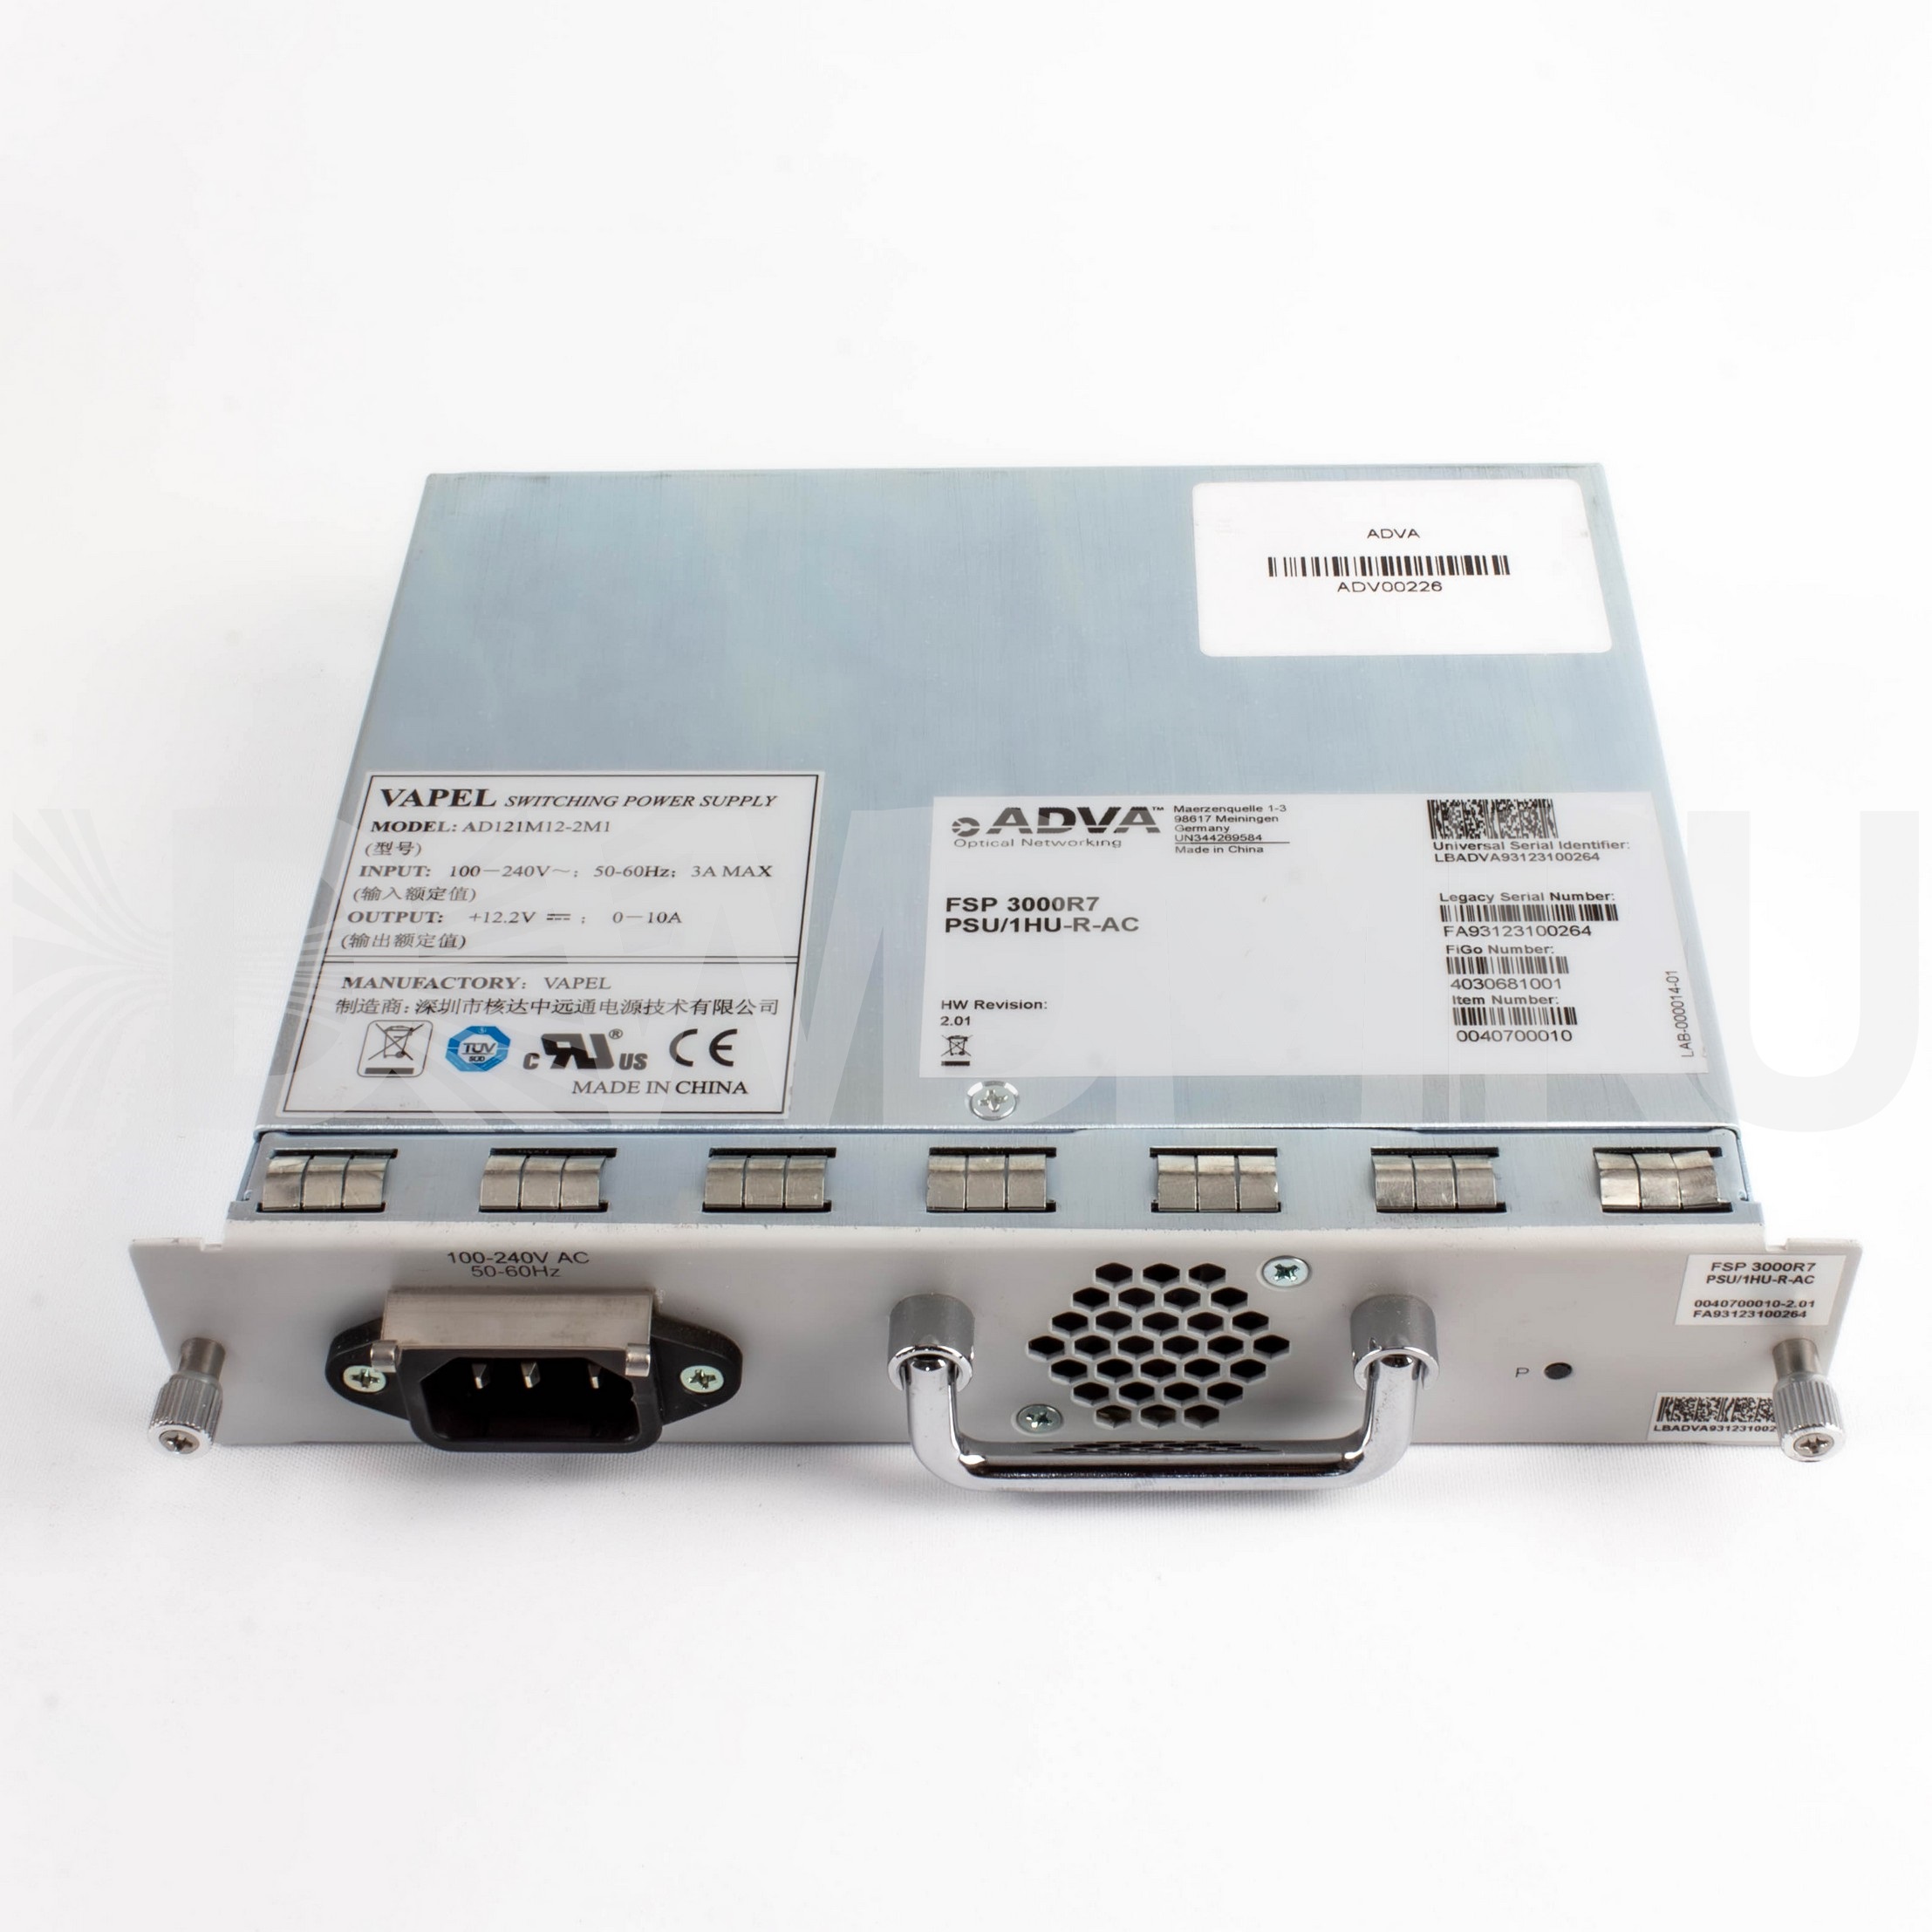 PSU/1HU-R-AC Power Supply Module (120W) AC for SH1HU-R ADVA Optical pn